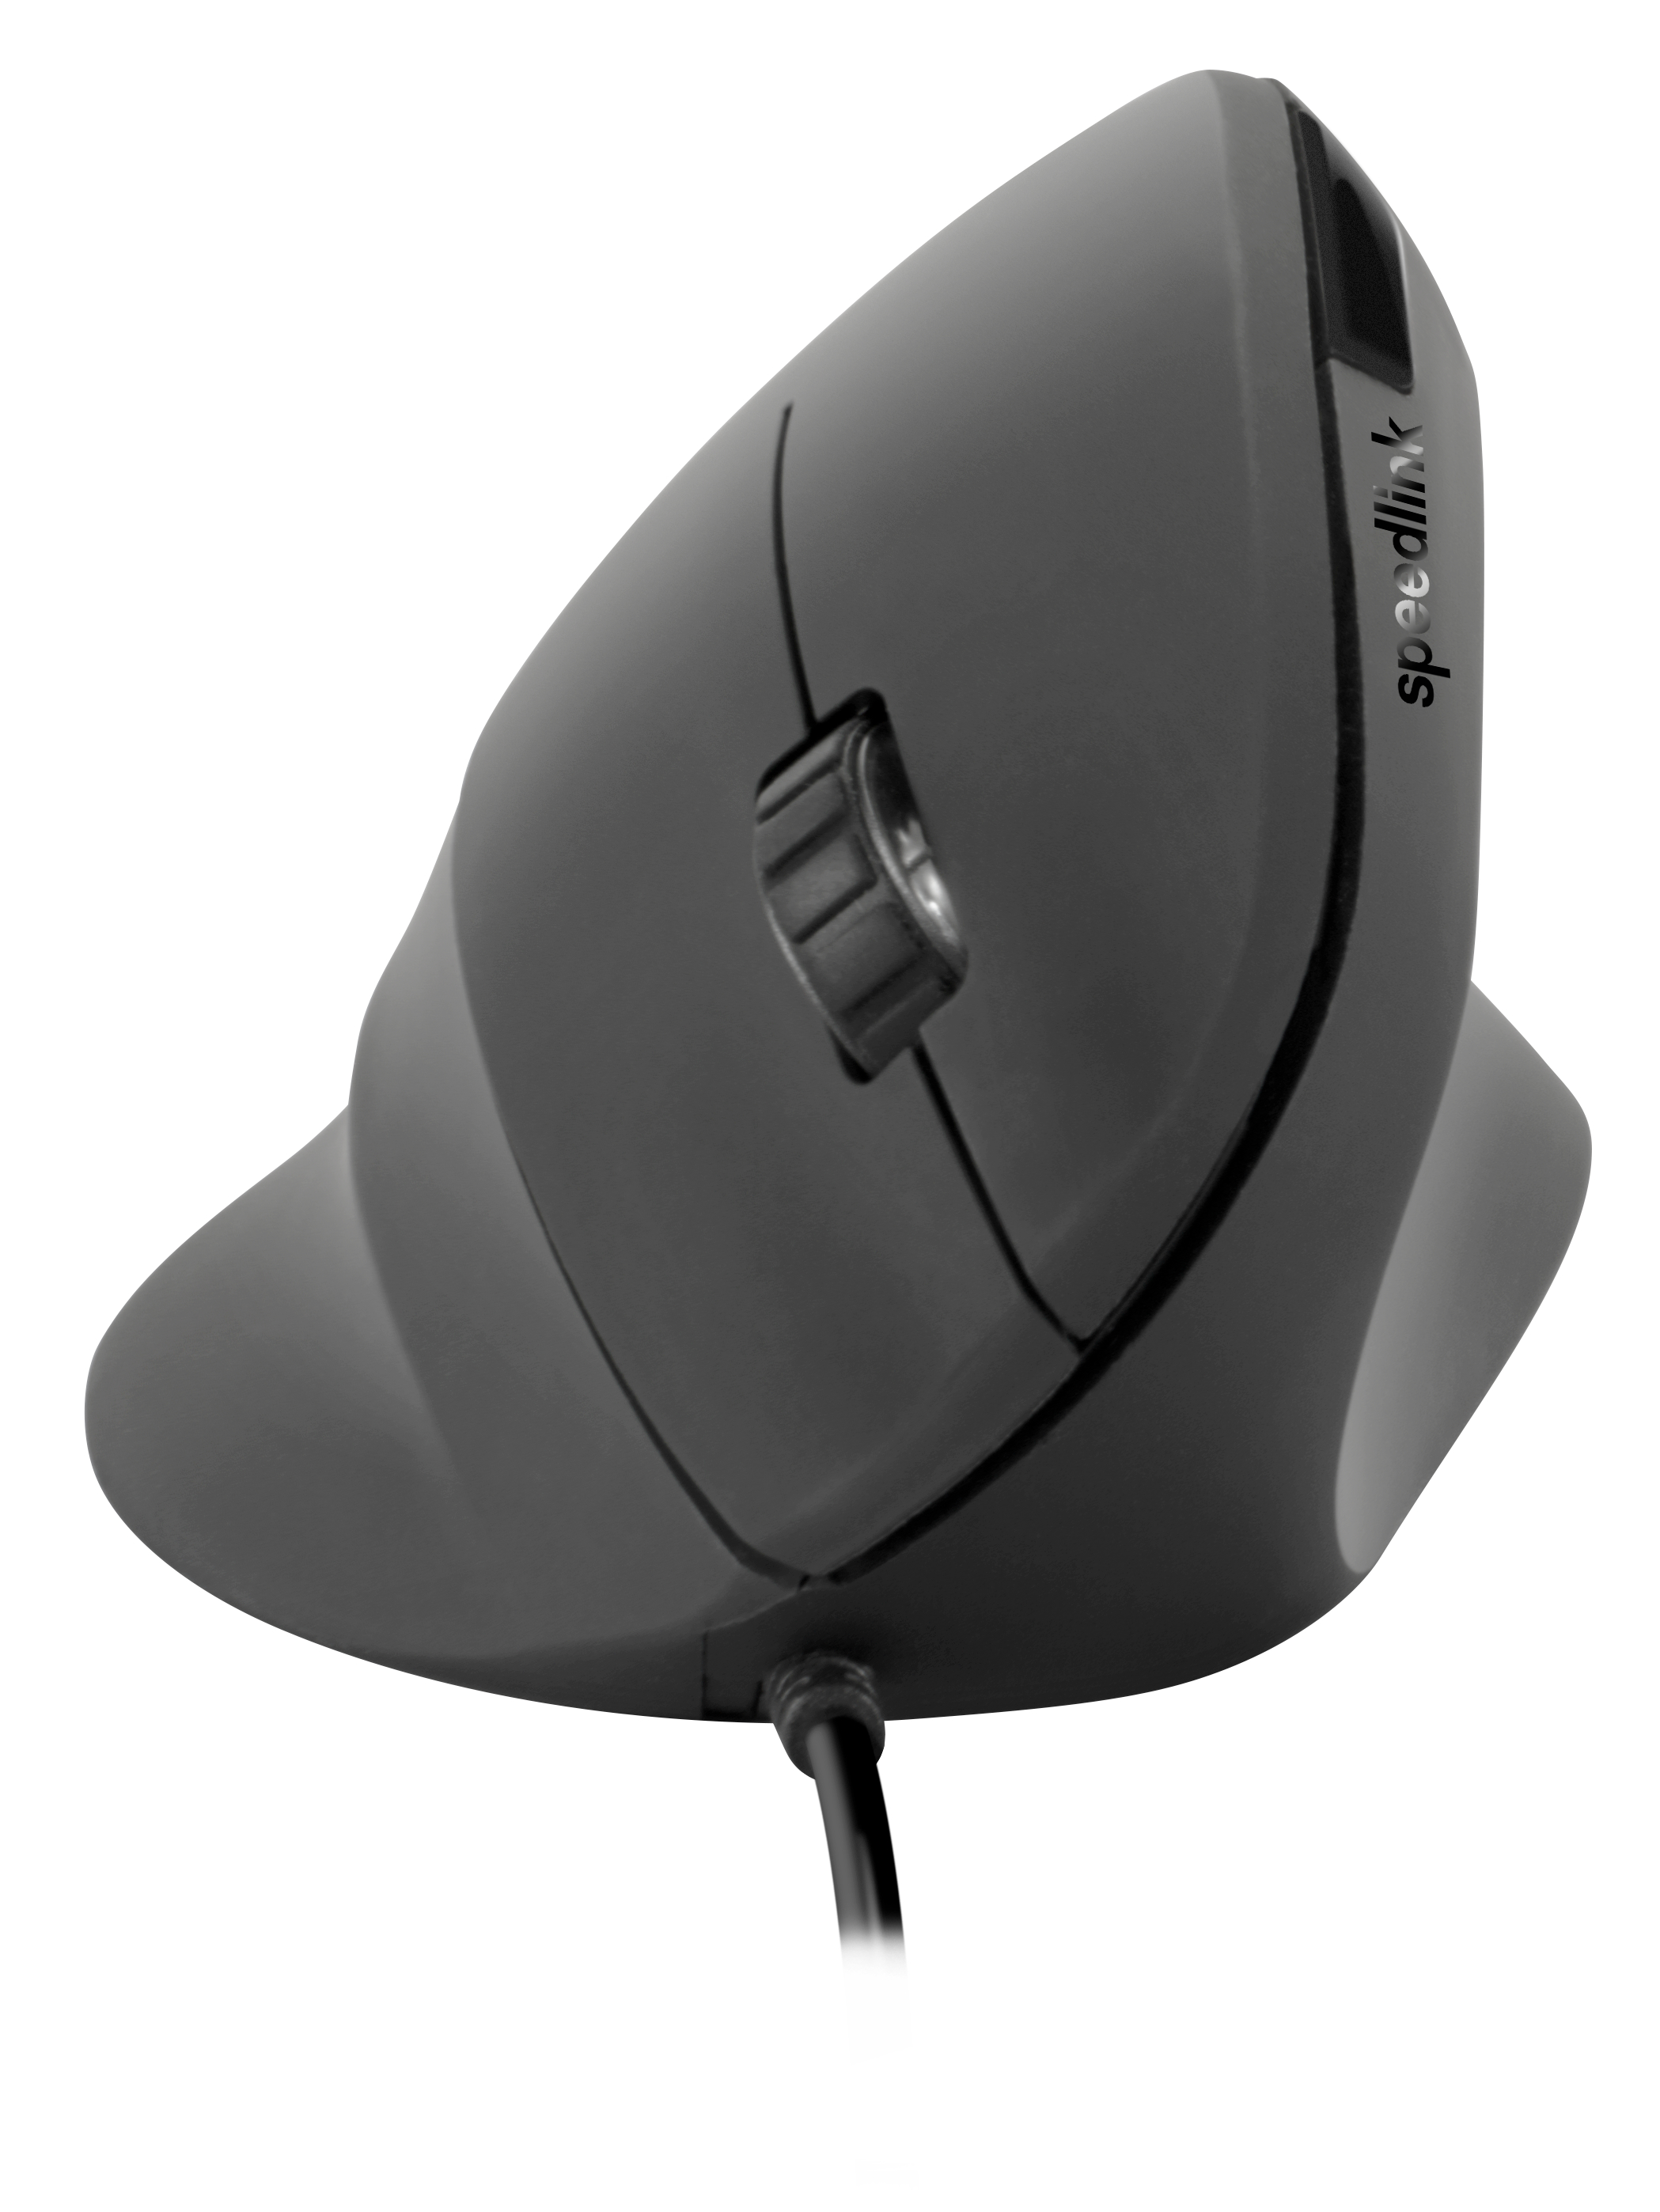 SPEEDLINK PIAVO Ergonomic Mouse USB SL-610019-RRBK vertical, rubber-black vertical, rubber-black